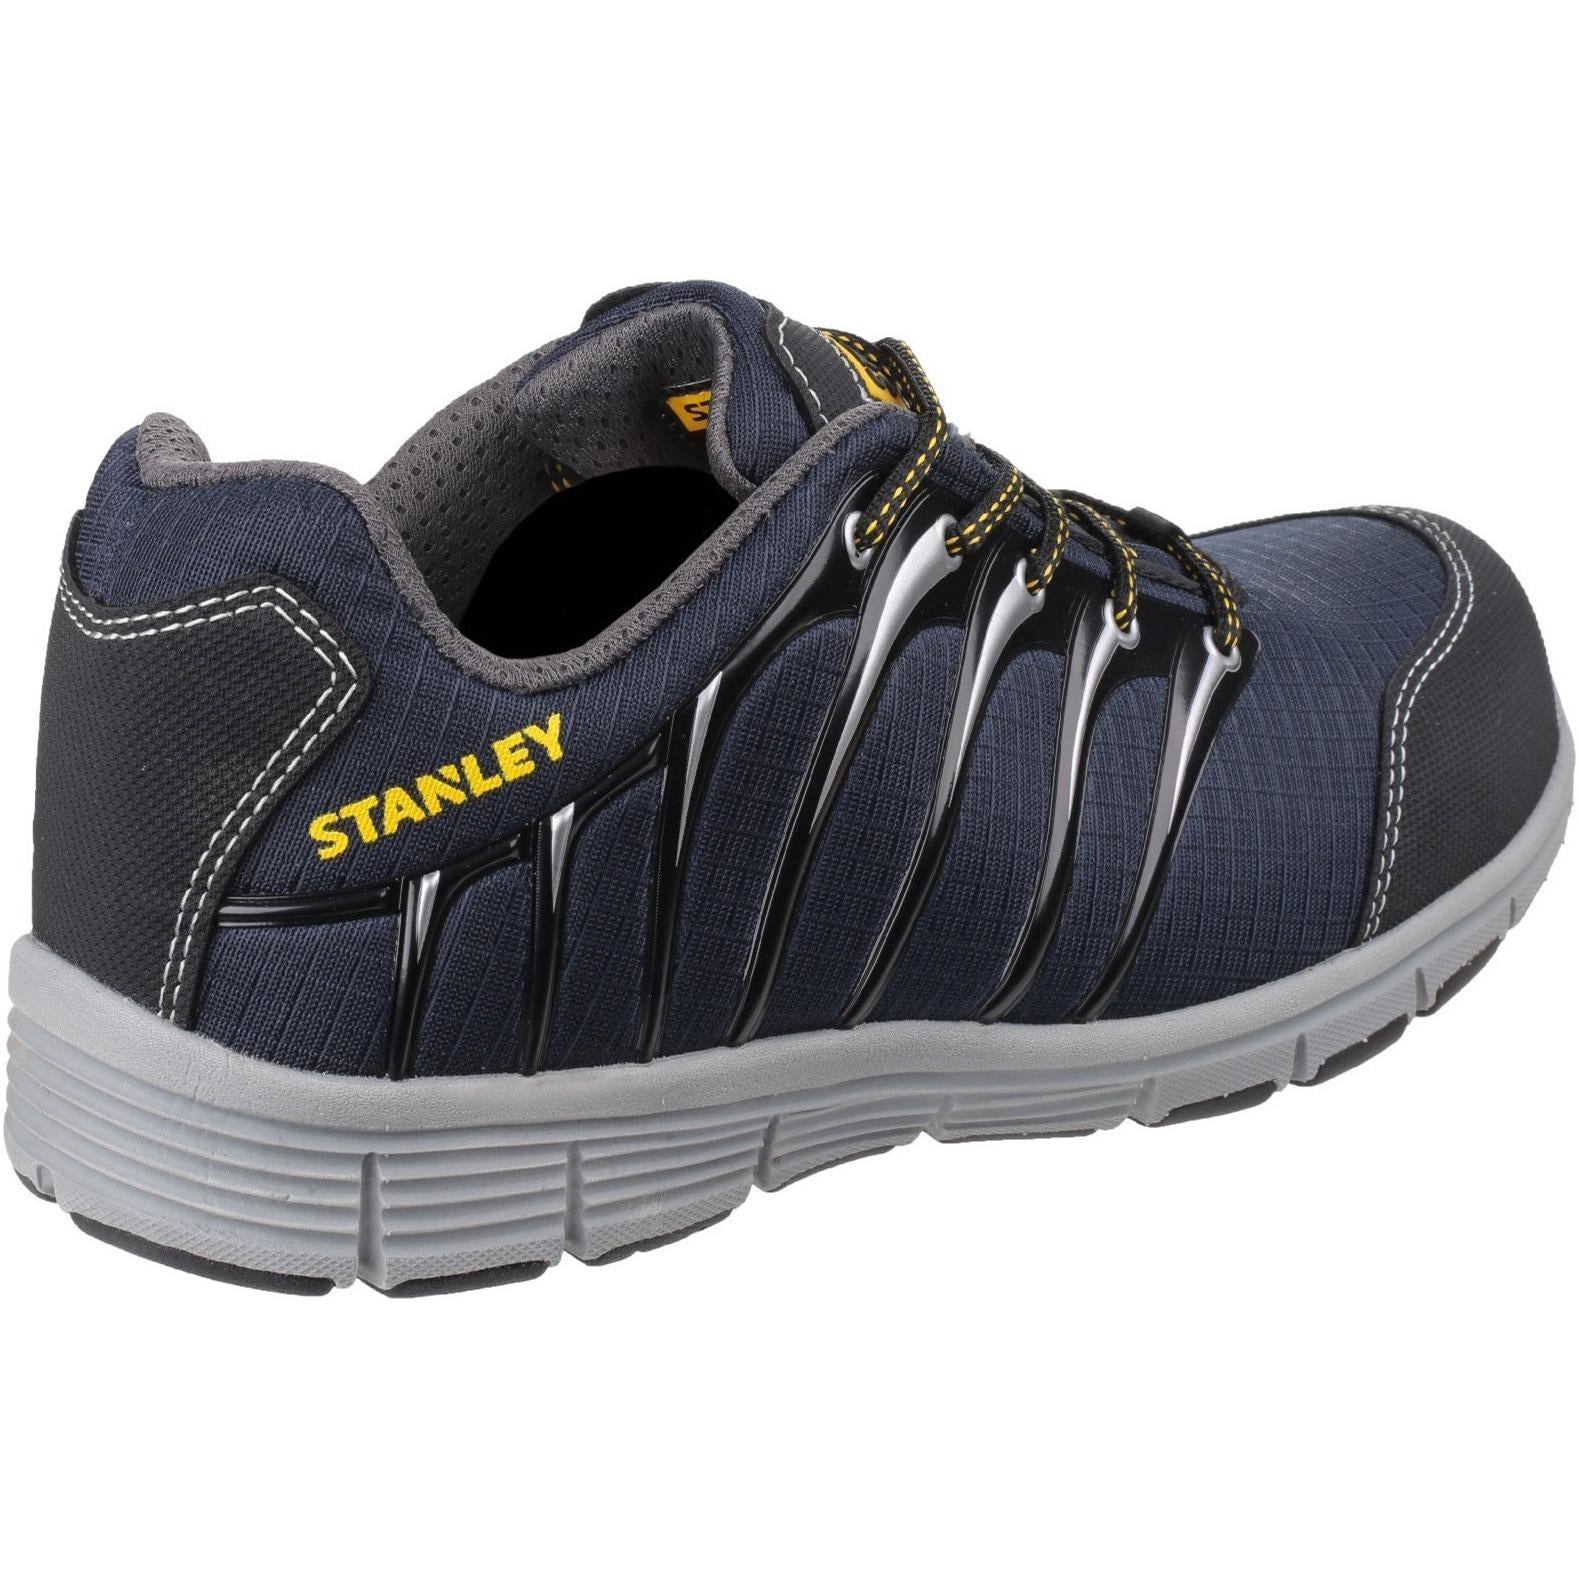 Stanley Globe Navy/Grey S1 P Sports Safety Trainer